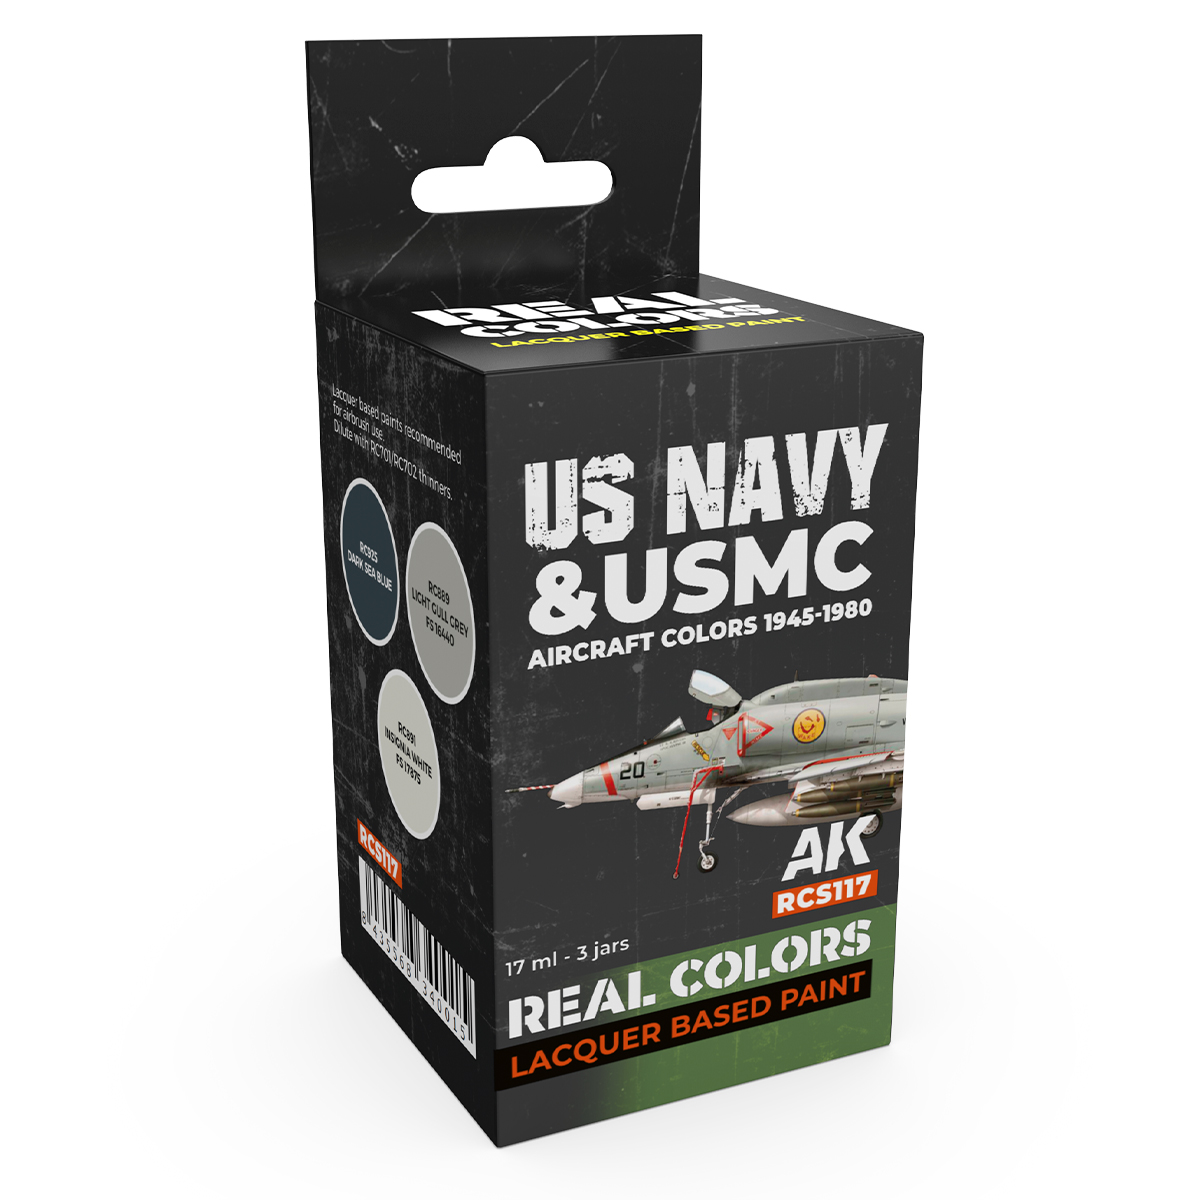 US Navy & USMC Aircraft Colors 1945-1980